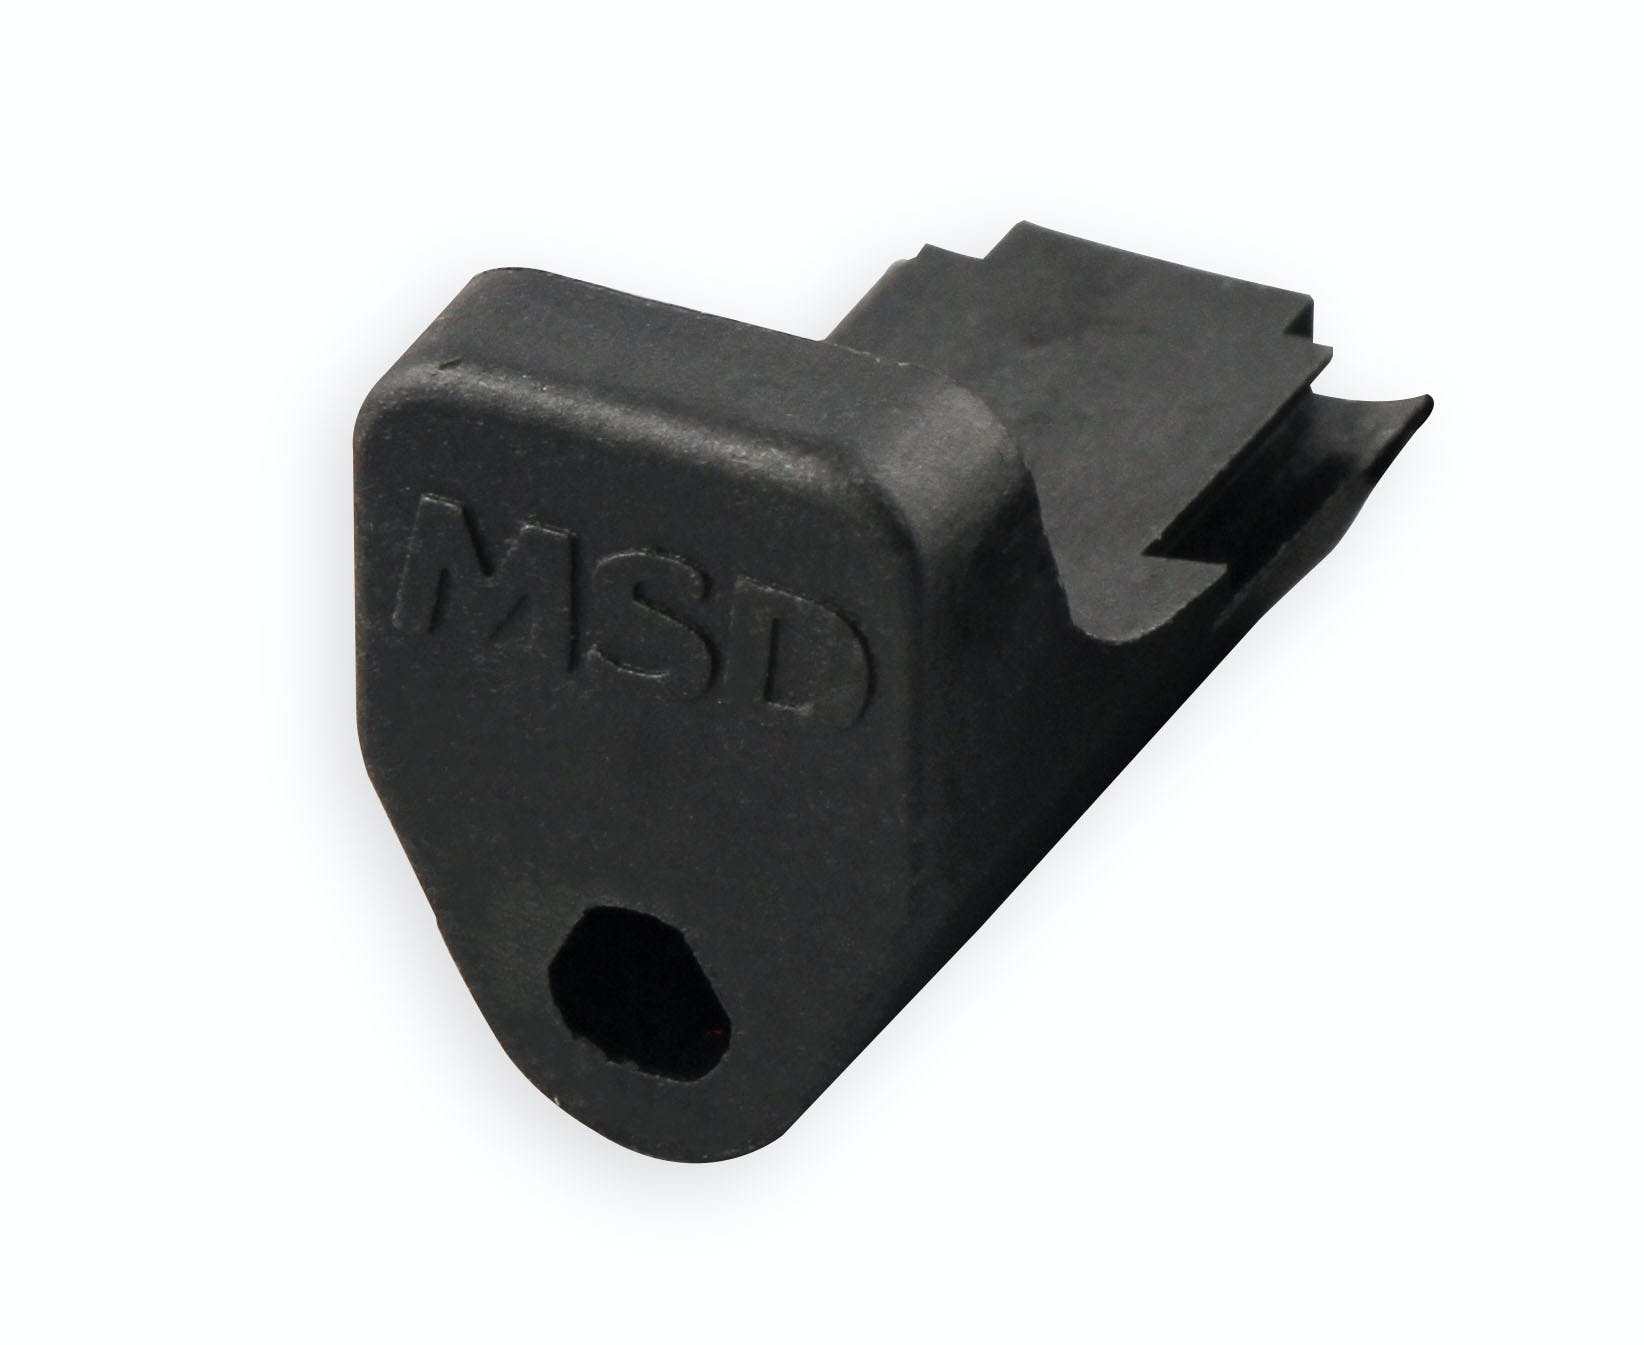 MSD Performance 8499 Distributor Cap Bolt Down Kit, Ford Cap